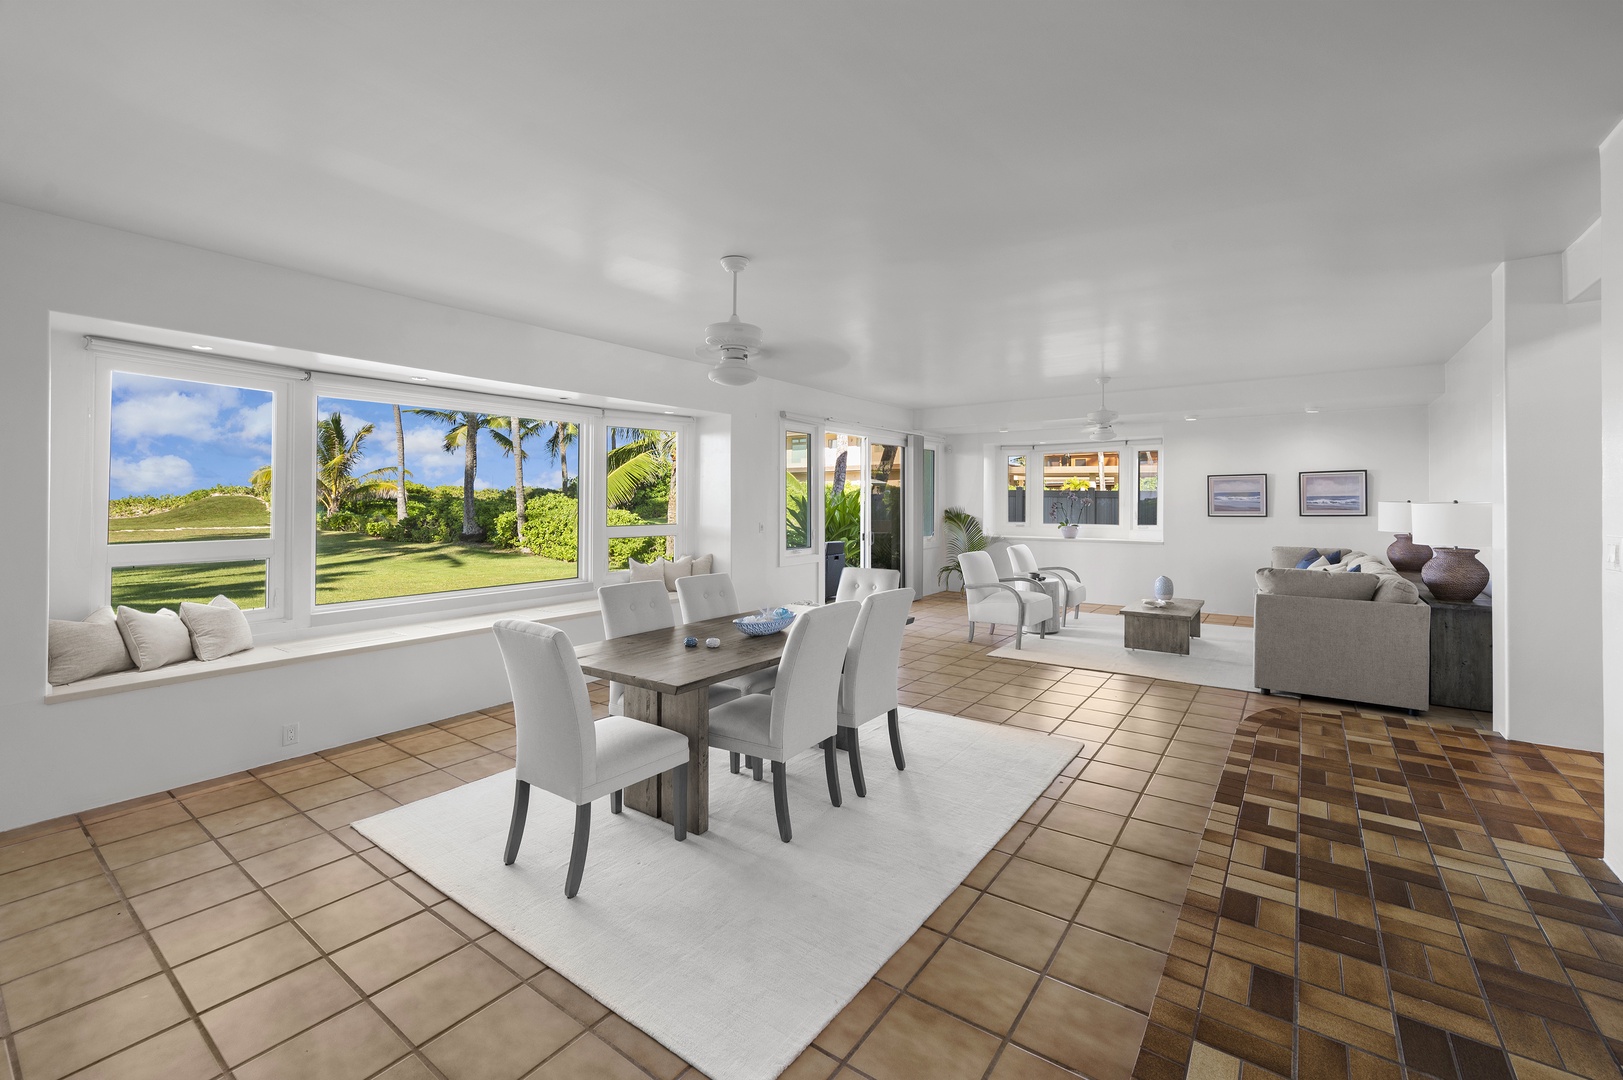 Kailua Vacation Rentals, Kailua Hale Kahakai - The indoor formal dining area comfortably seats 6 with gorgeous views